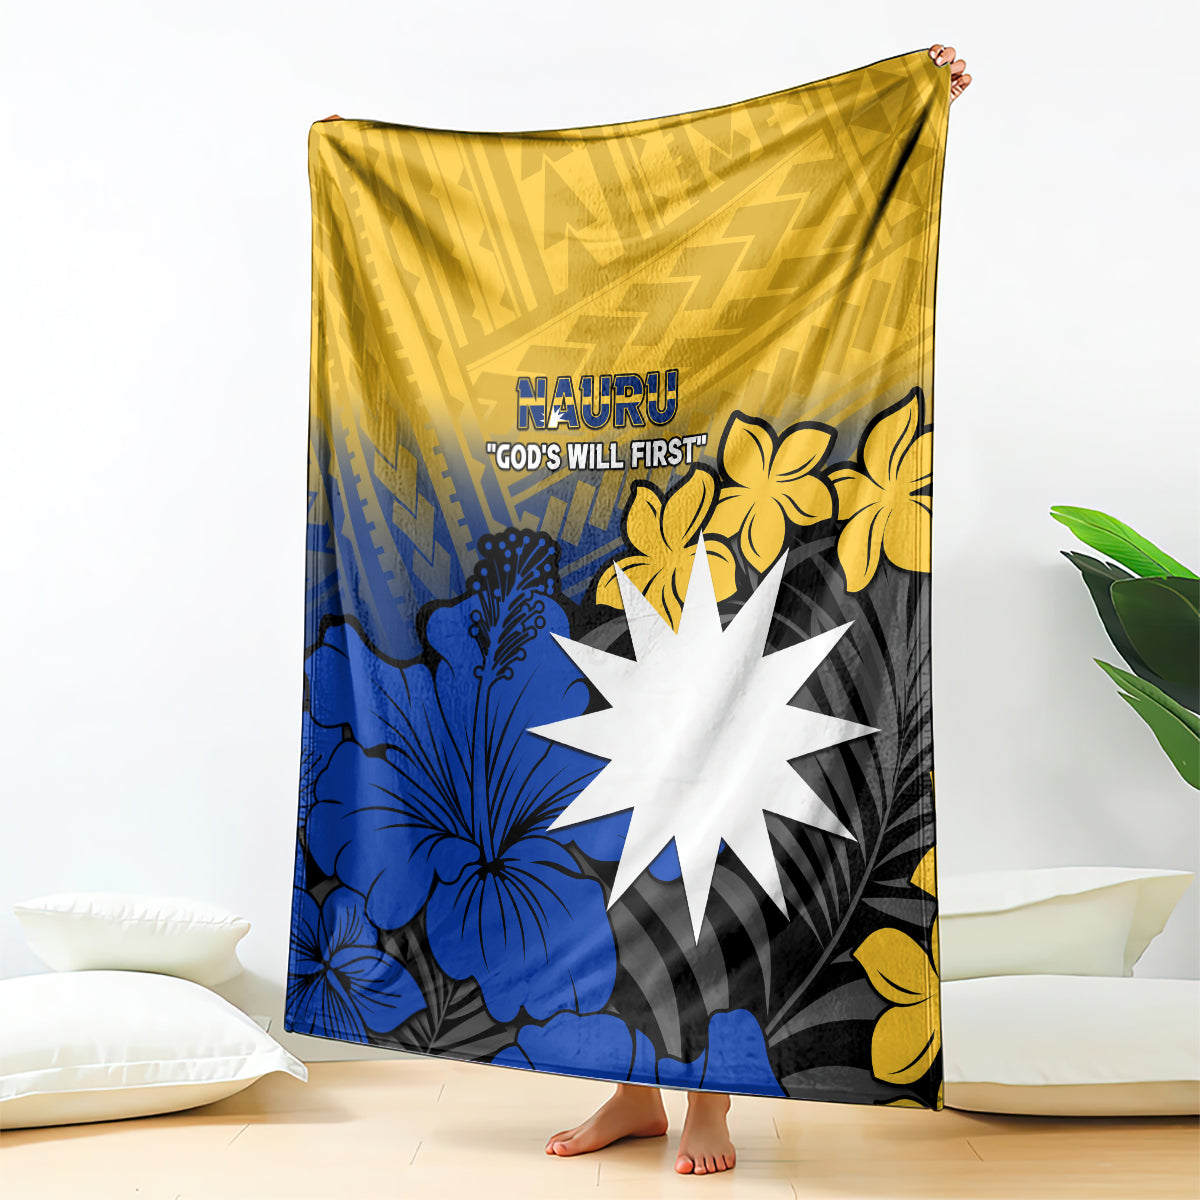 Nauru Independence Day Blanket Repubrikin Naoero Polynesian Pattern LT14 Blue - Polynesian Pride